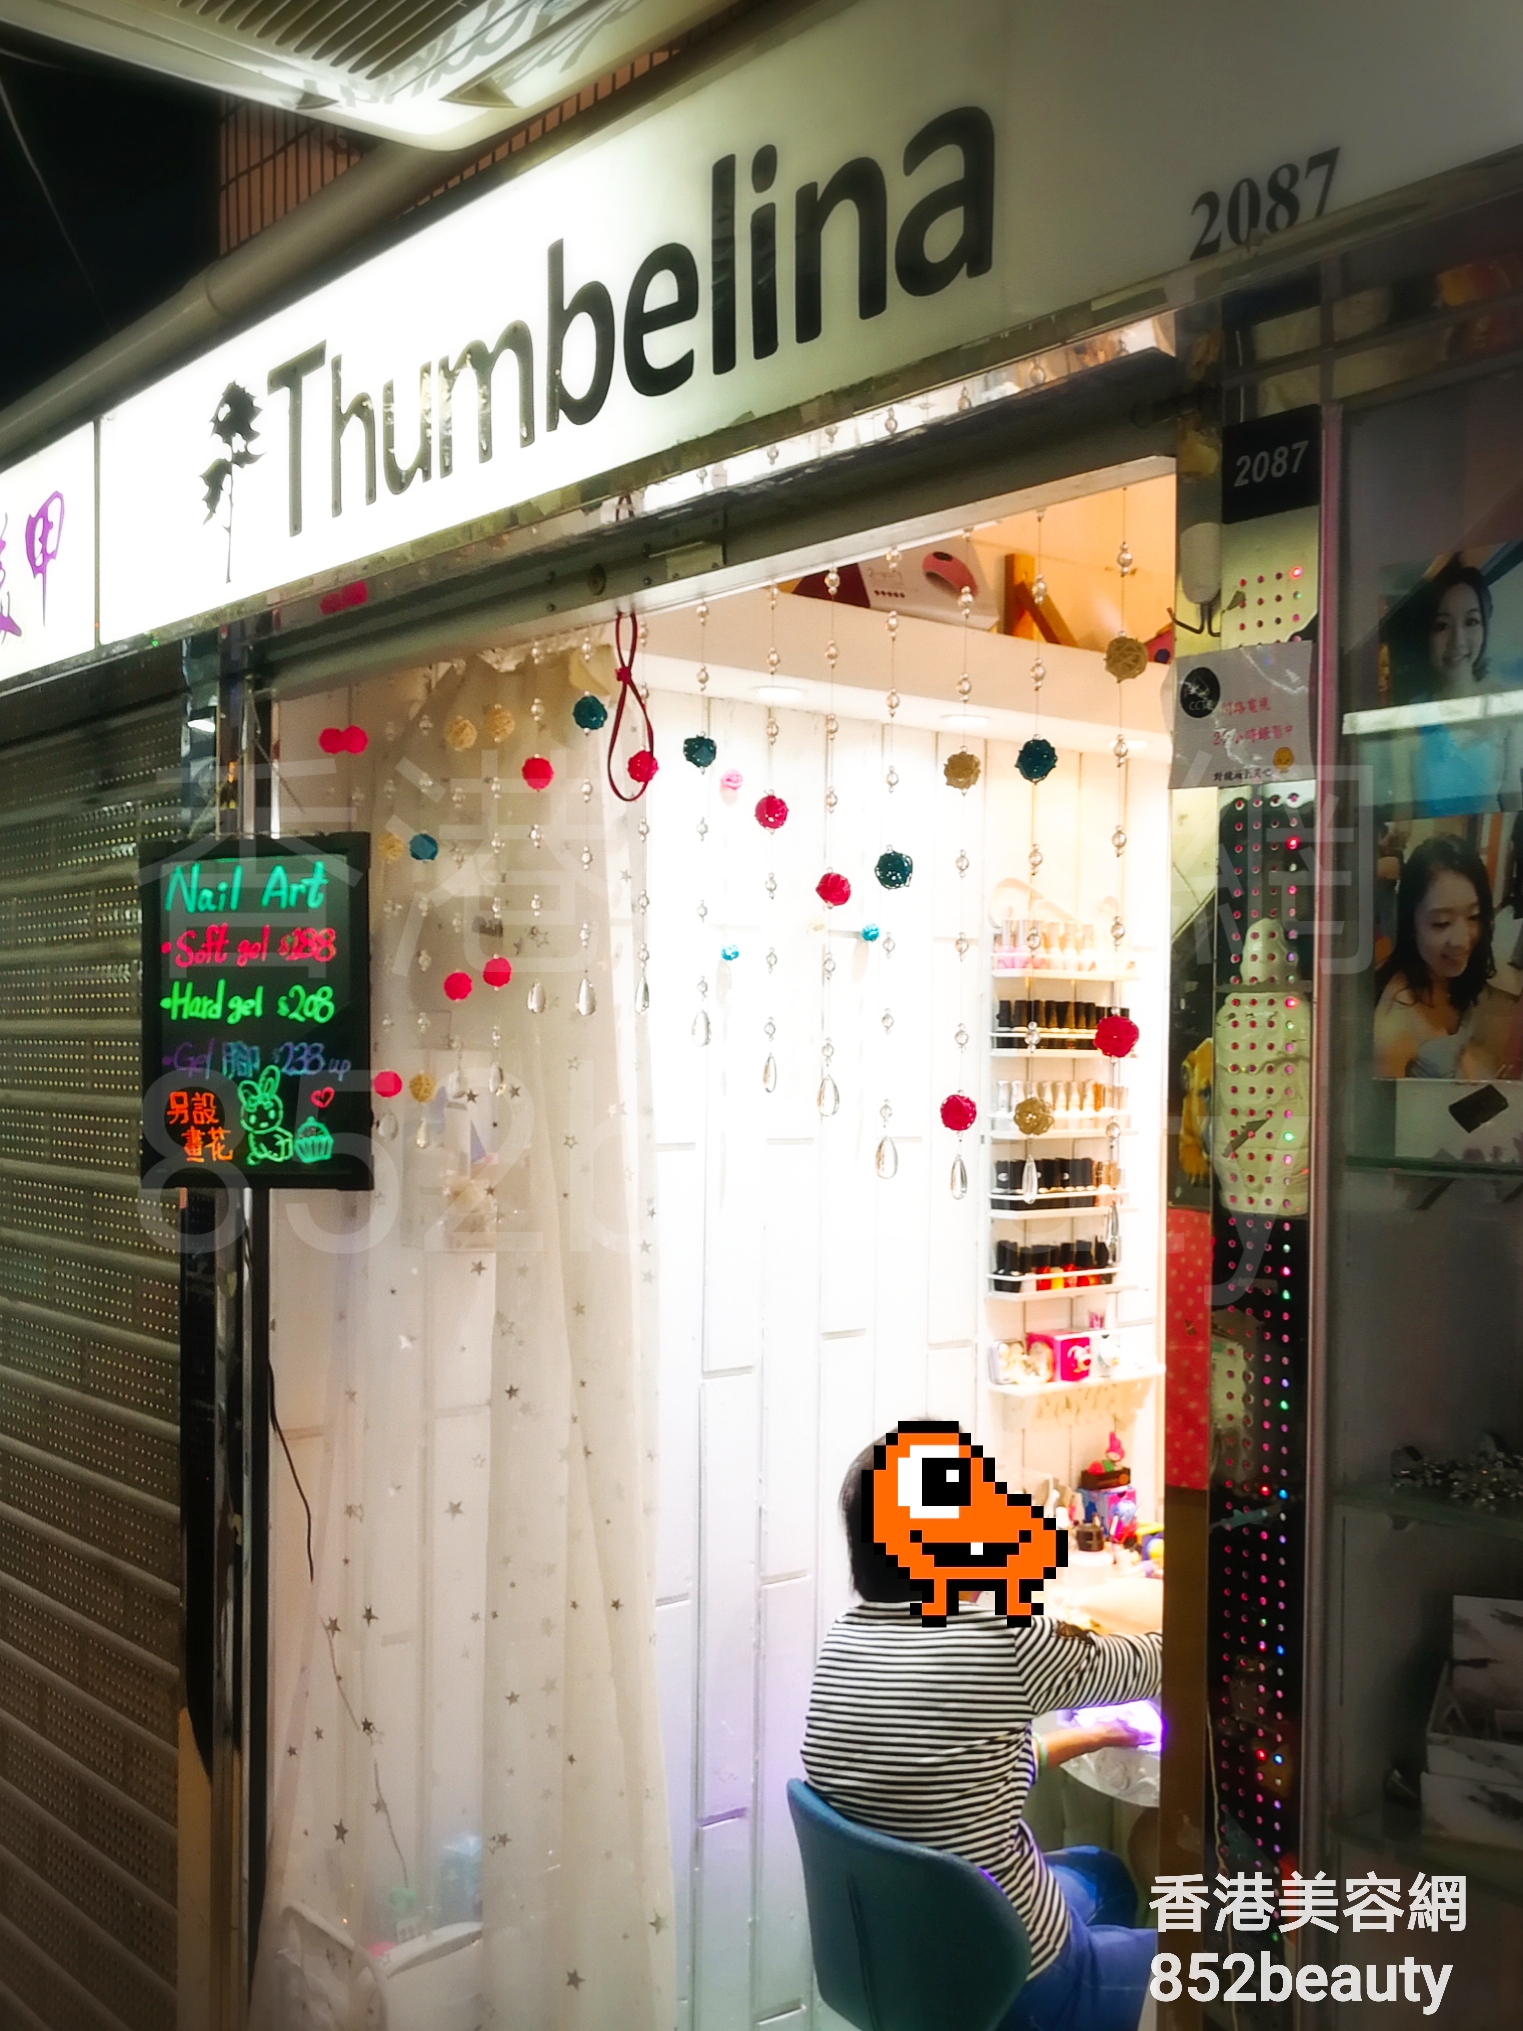 香港美容網 Hong Kong Beauty Salon 美容院 / 美容師: Thumbelina